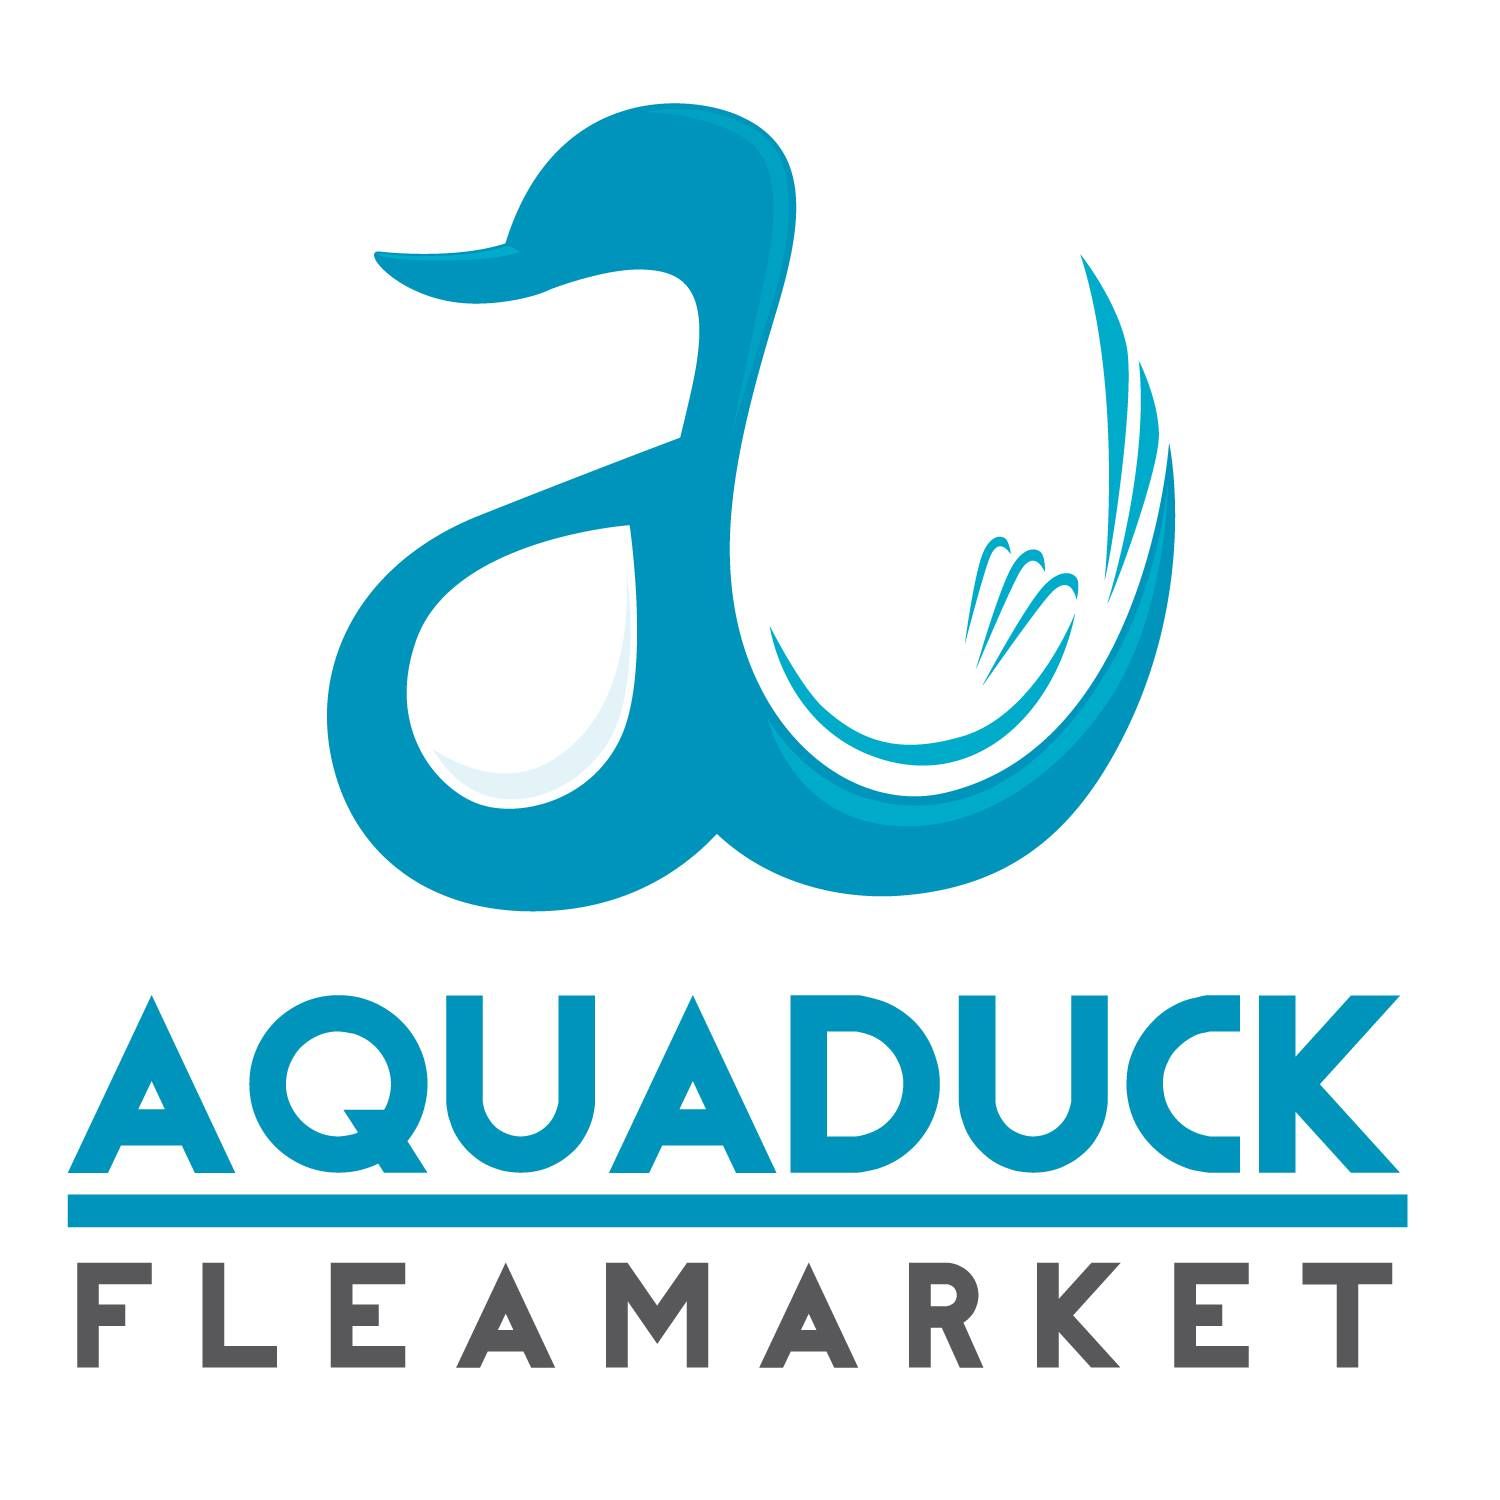 AquaDuck FleaMarket